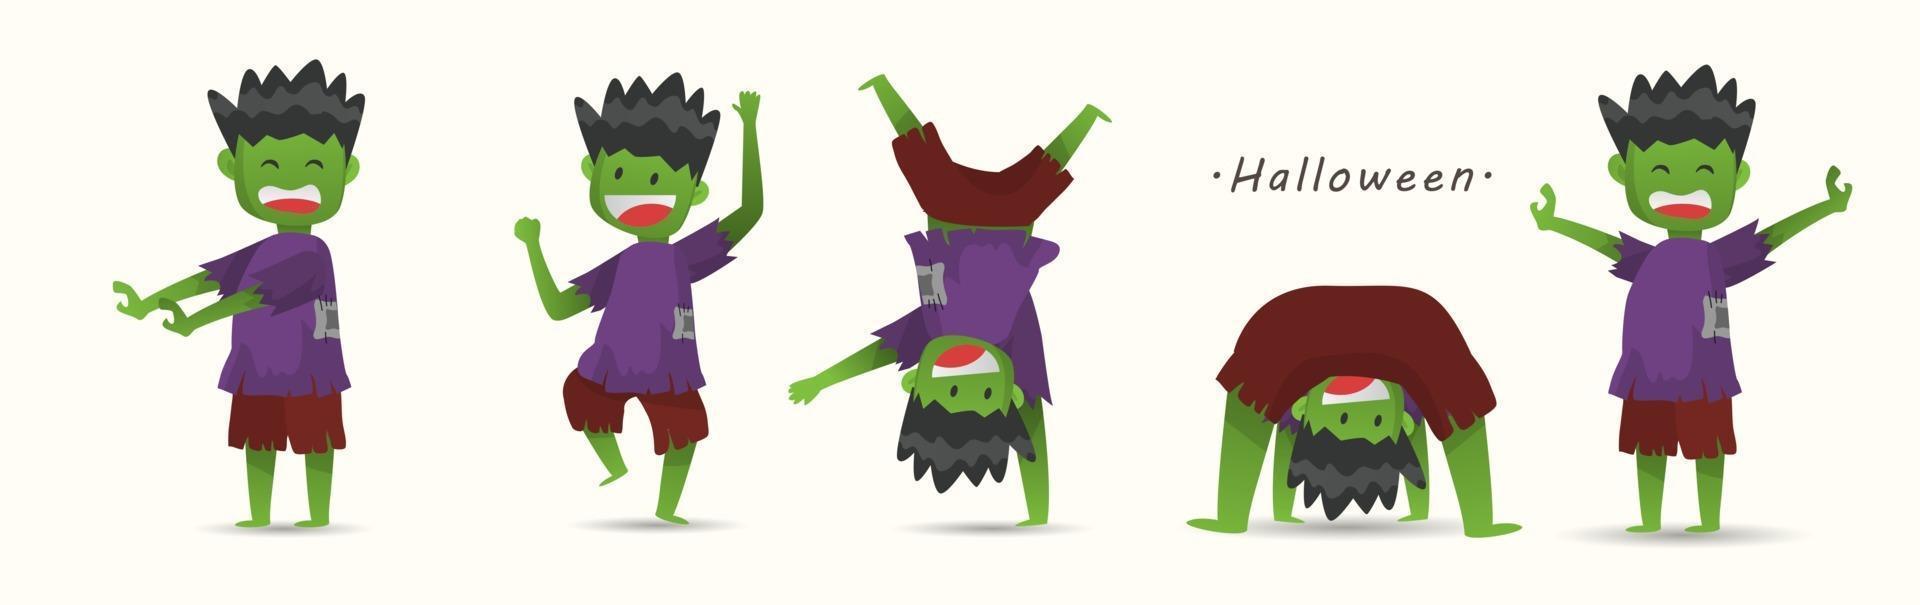 glad halloween dag zombie barn seriefigurer design vektor